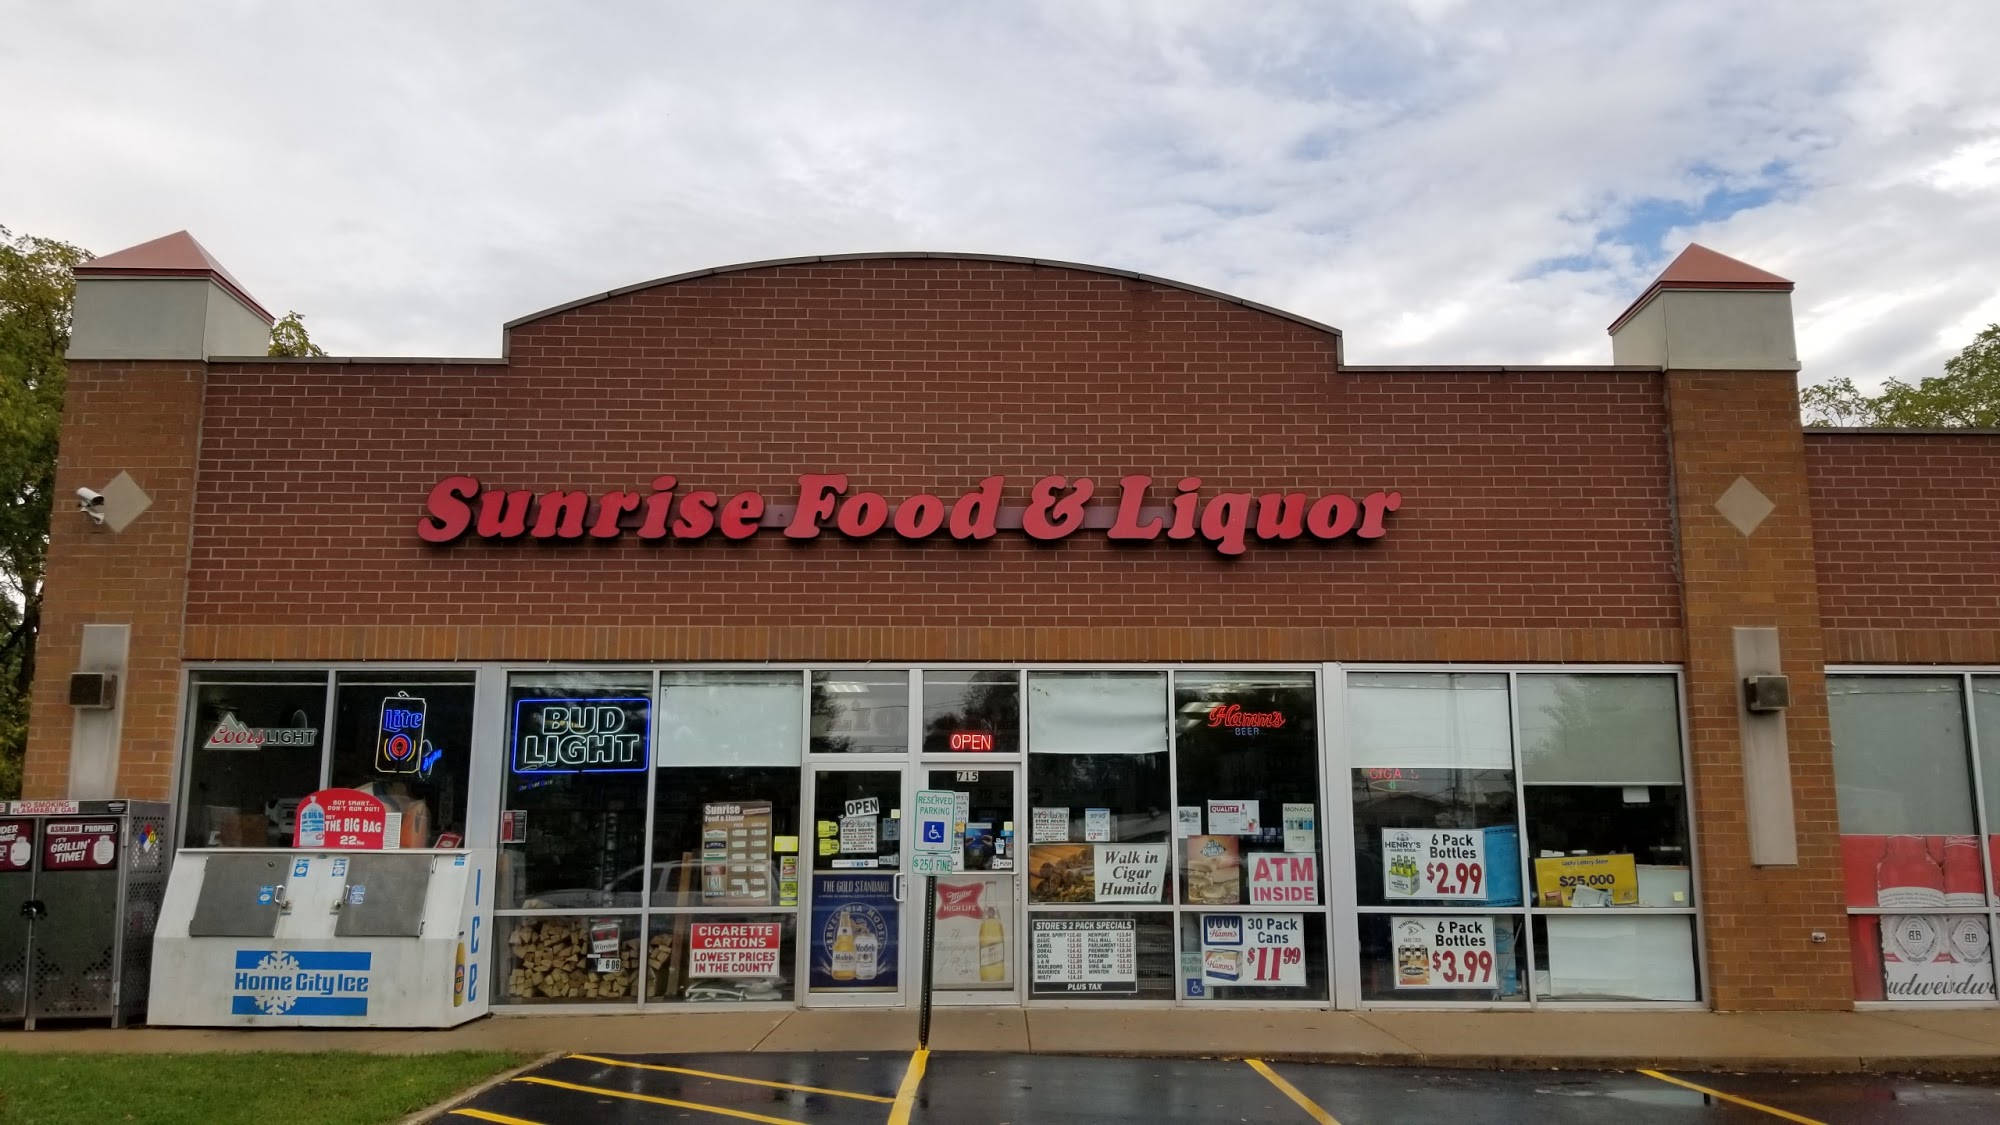 Sunrise Food & Liquor